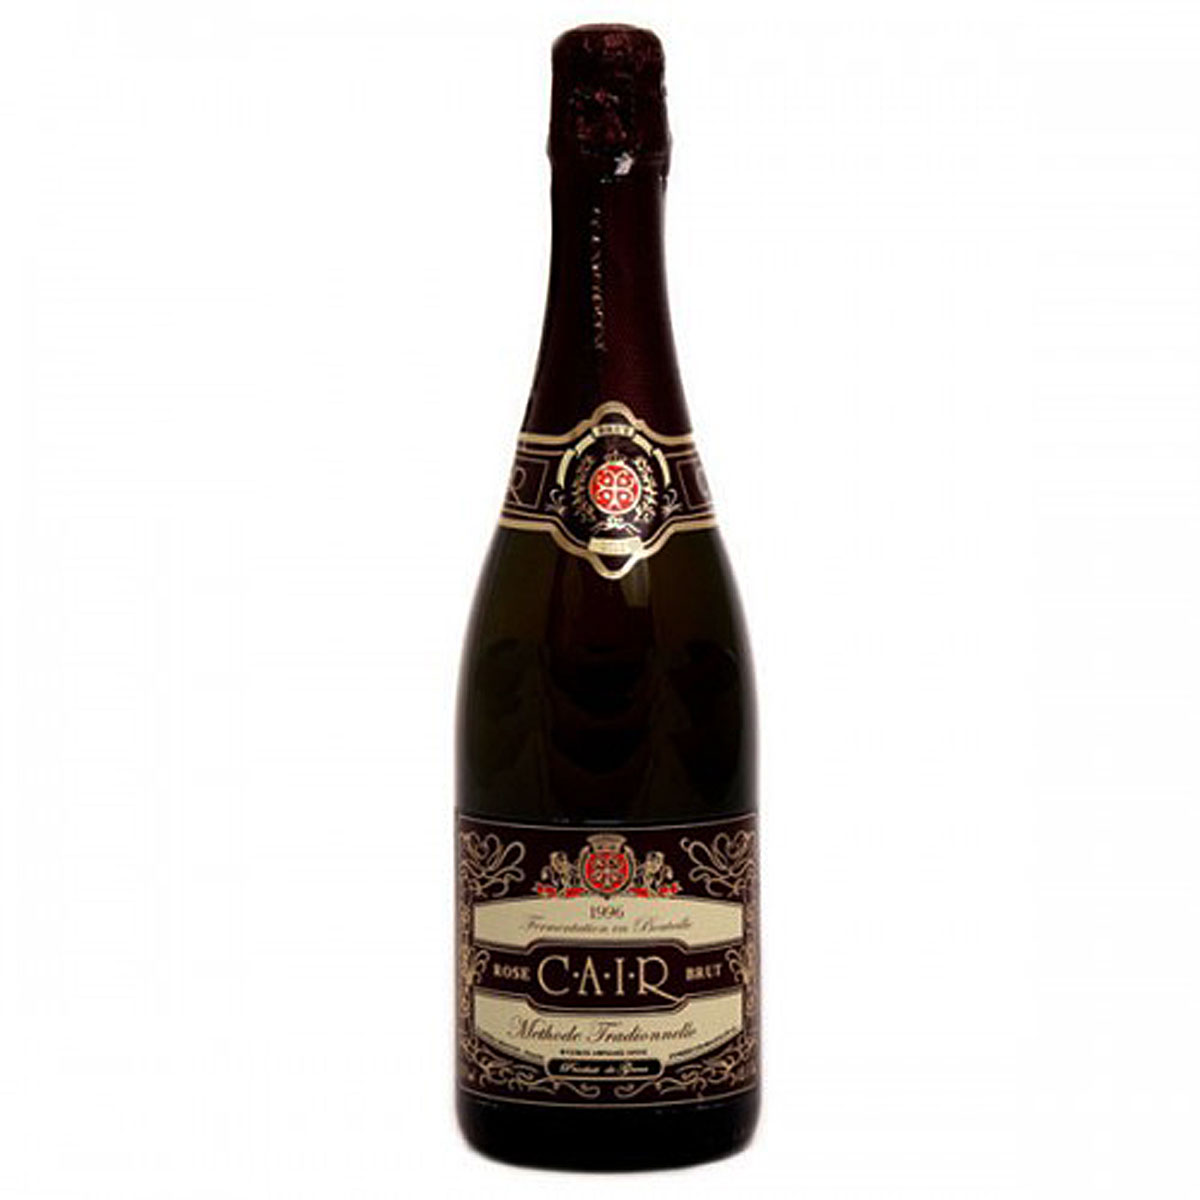 a bottle of sparkling wine cair rose reserve 10 yo